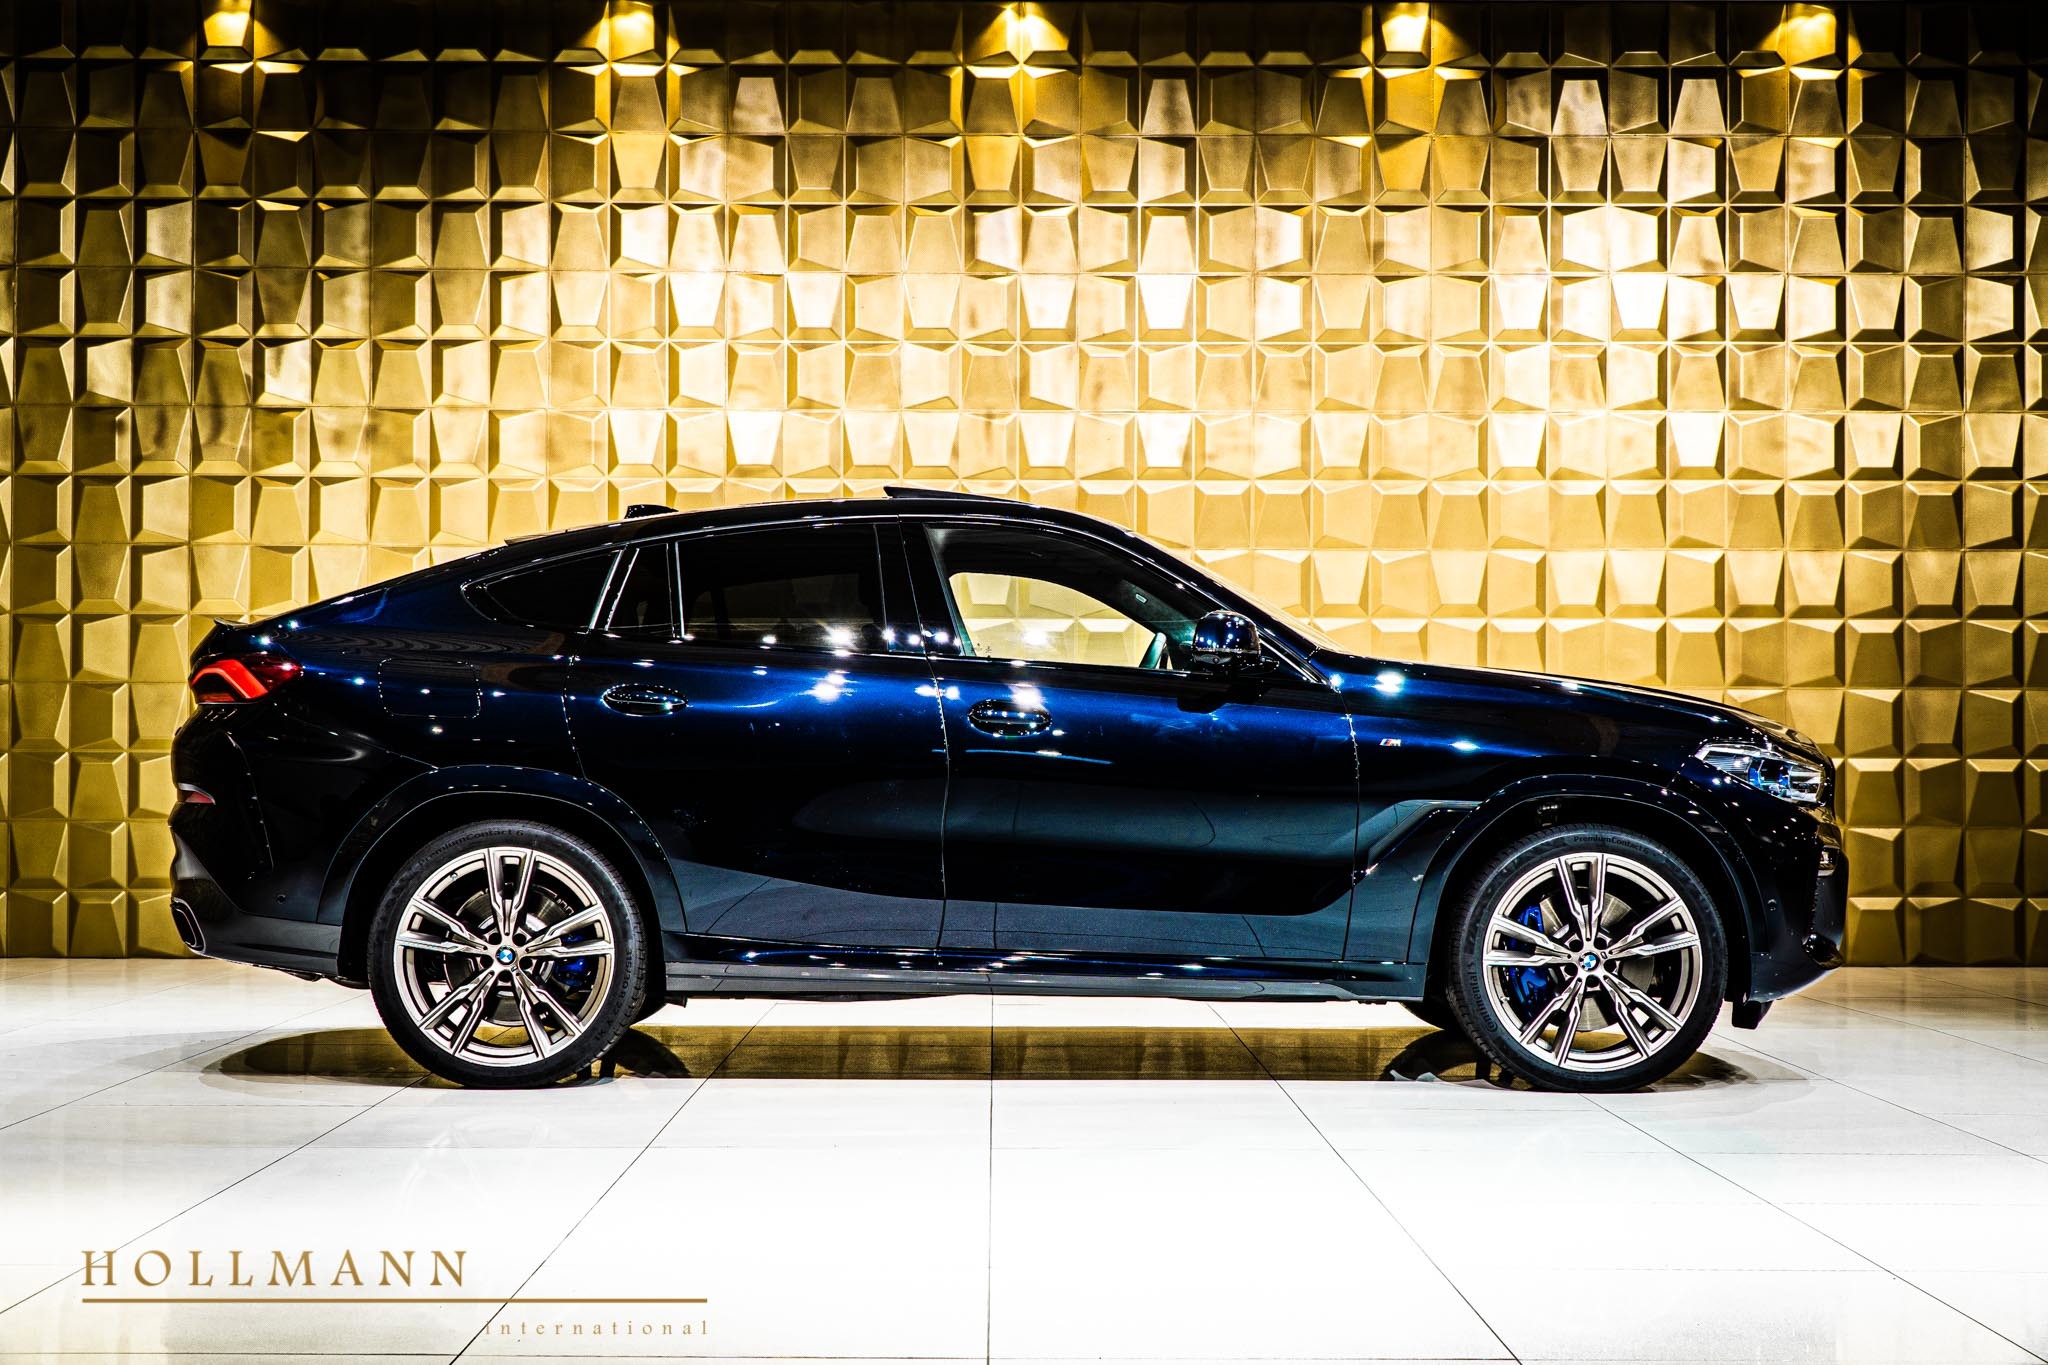 BMW X6 M50i Hollmann International Germany For sale on LuxuryPulse.